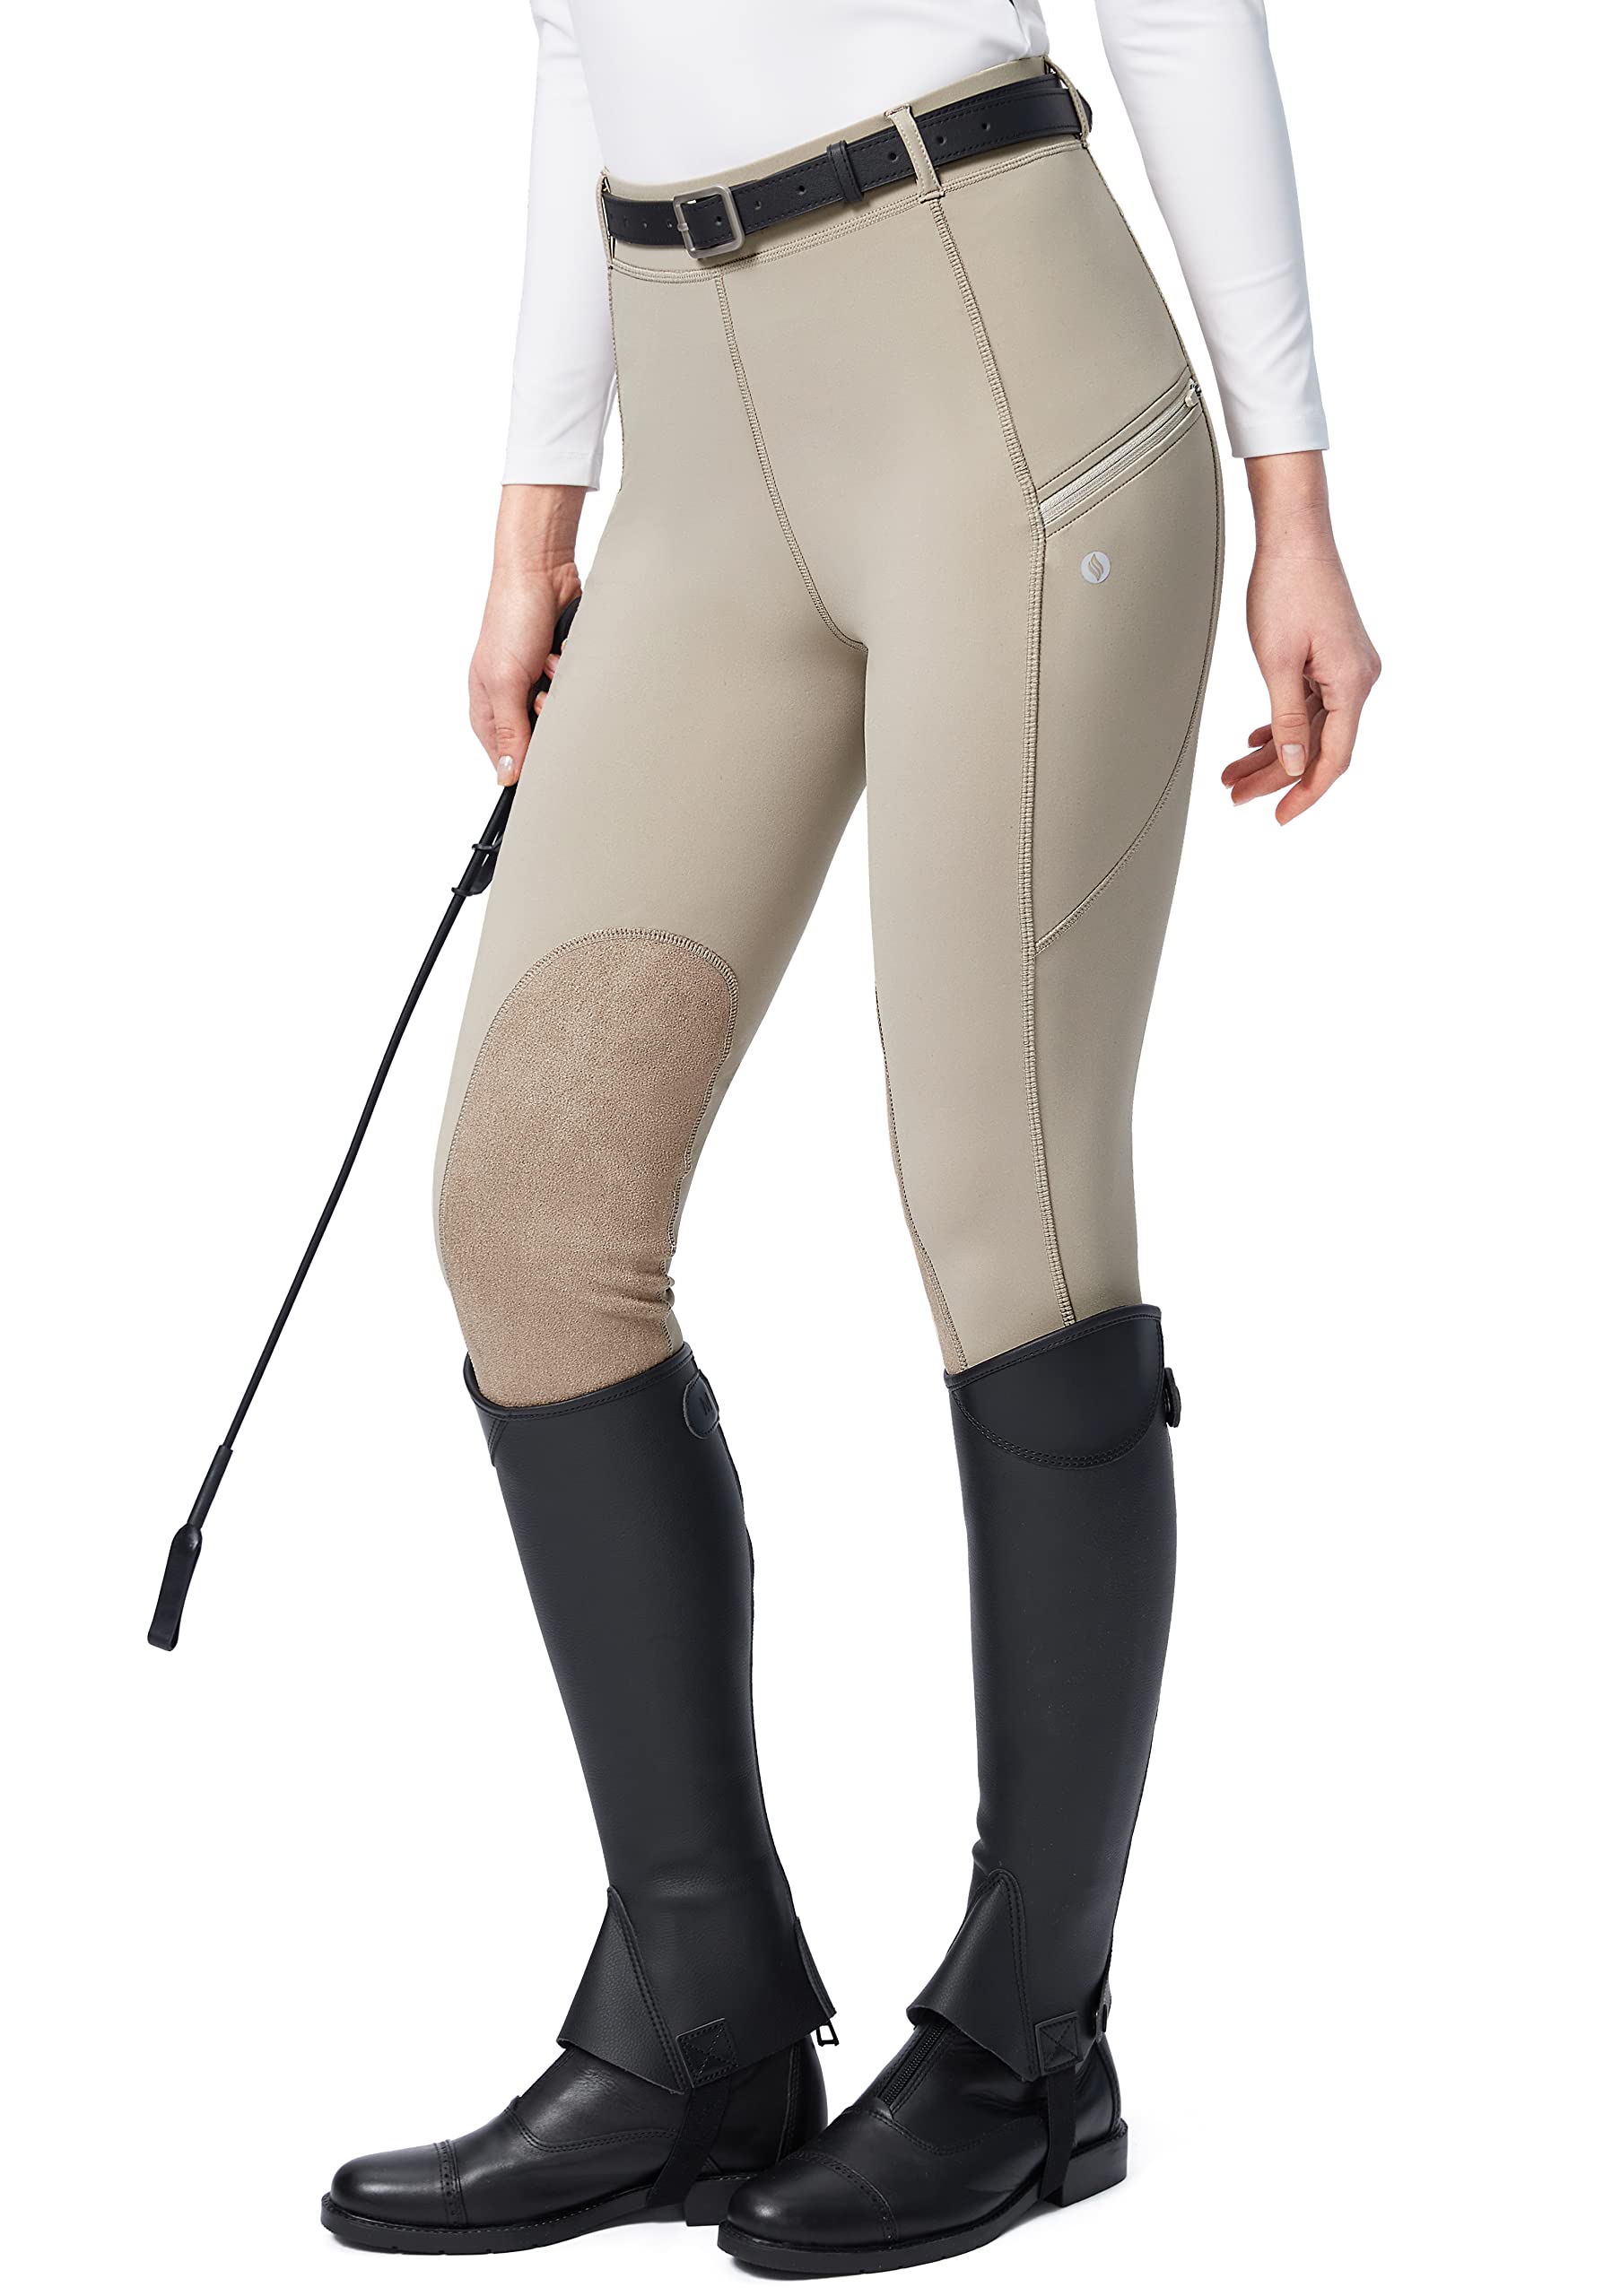 SANTINY Women's Horse Riding Pants with Zipper Pockets Knee-Patch